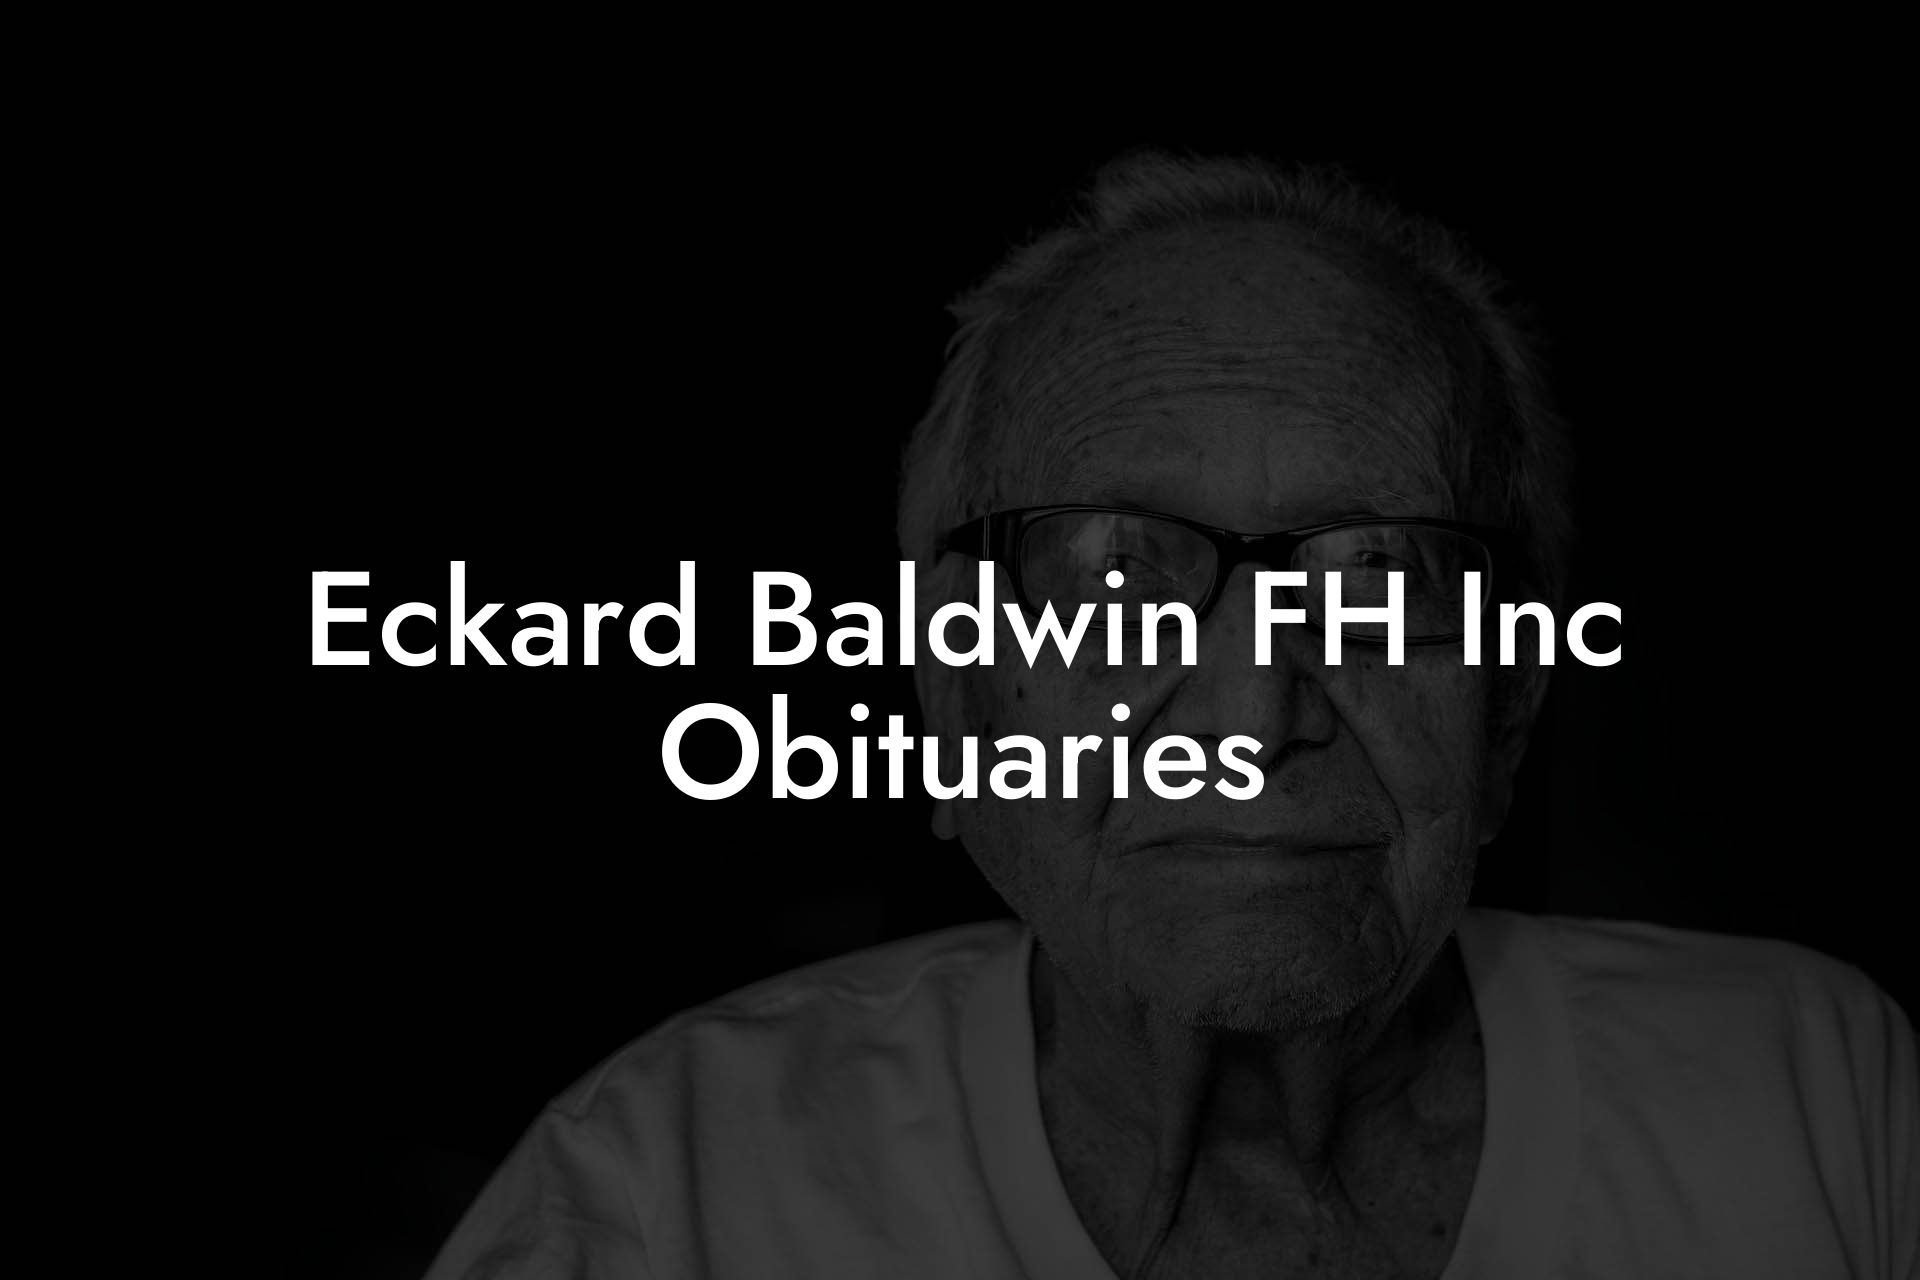 Eckard Baldwin FH Inc Obituaries